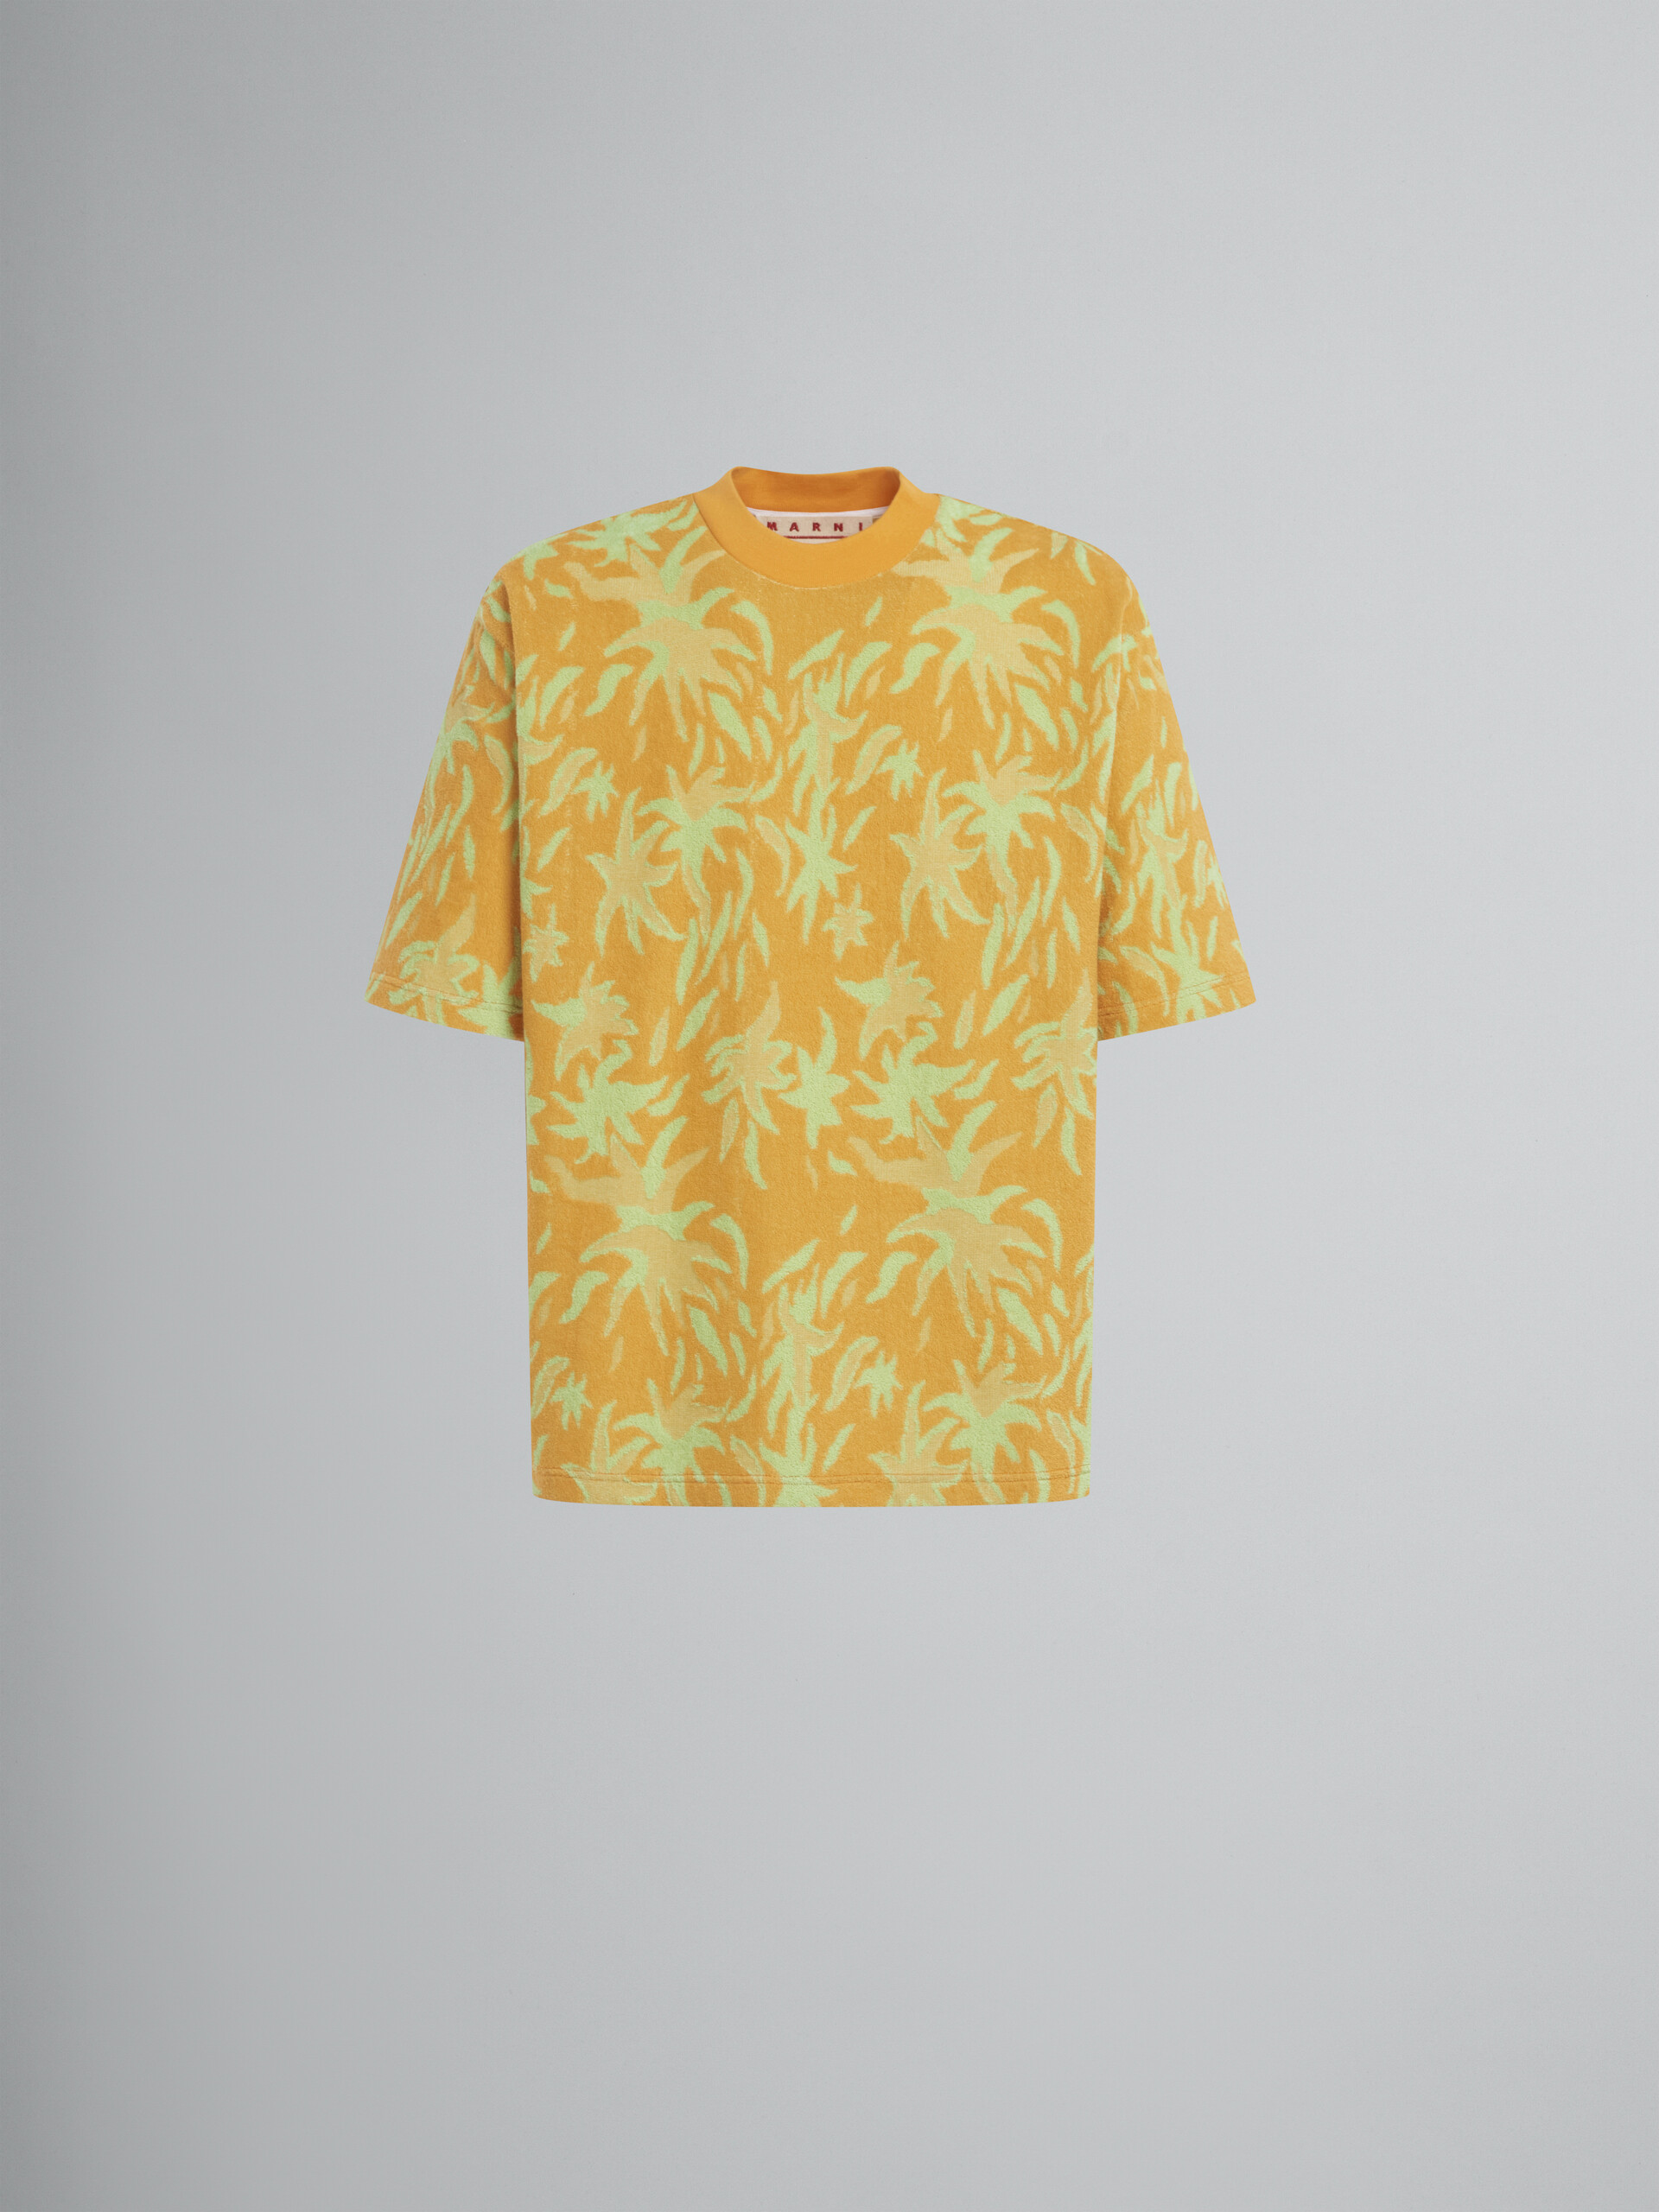 Marni x No Vacancy Inn - Orange jacquard sponge fabric T-shirt - T-shirts - Image 1